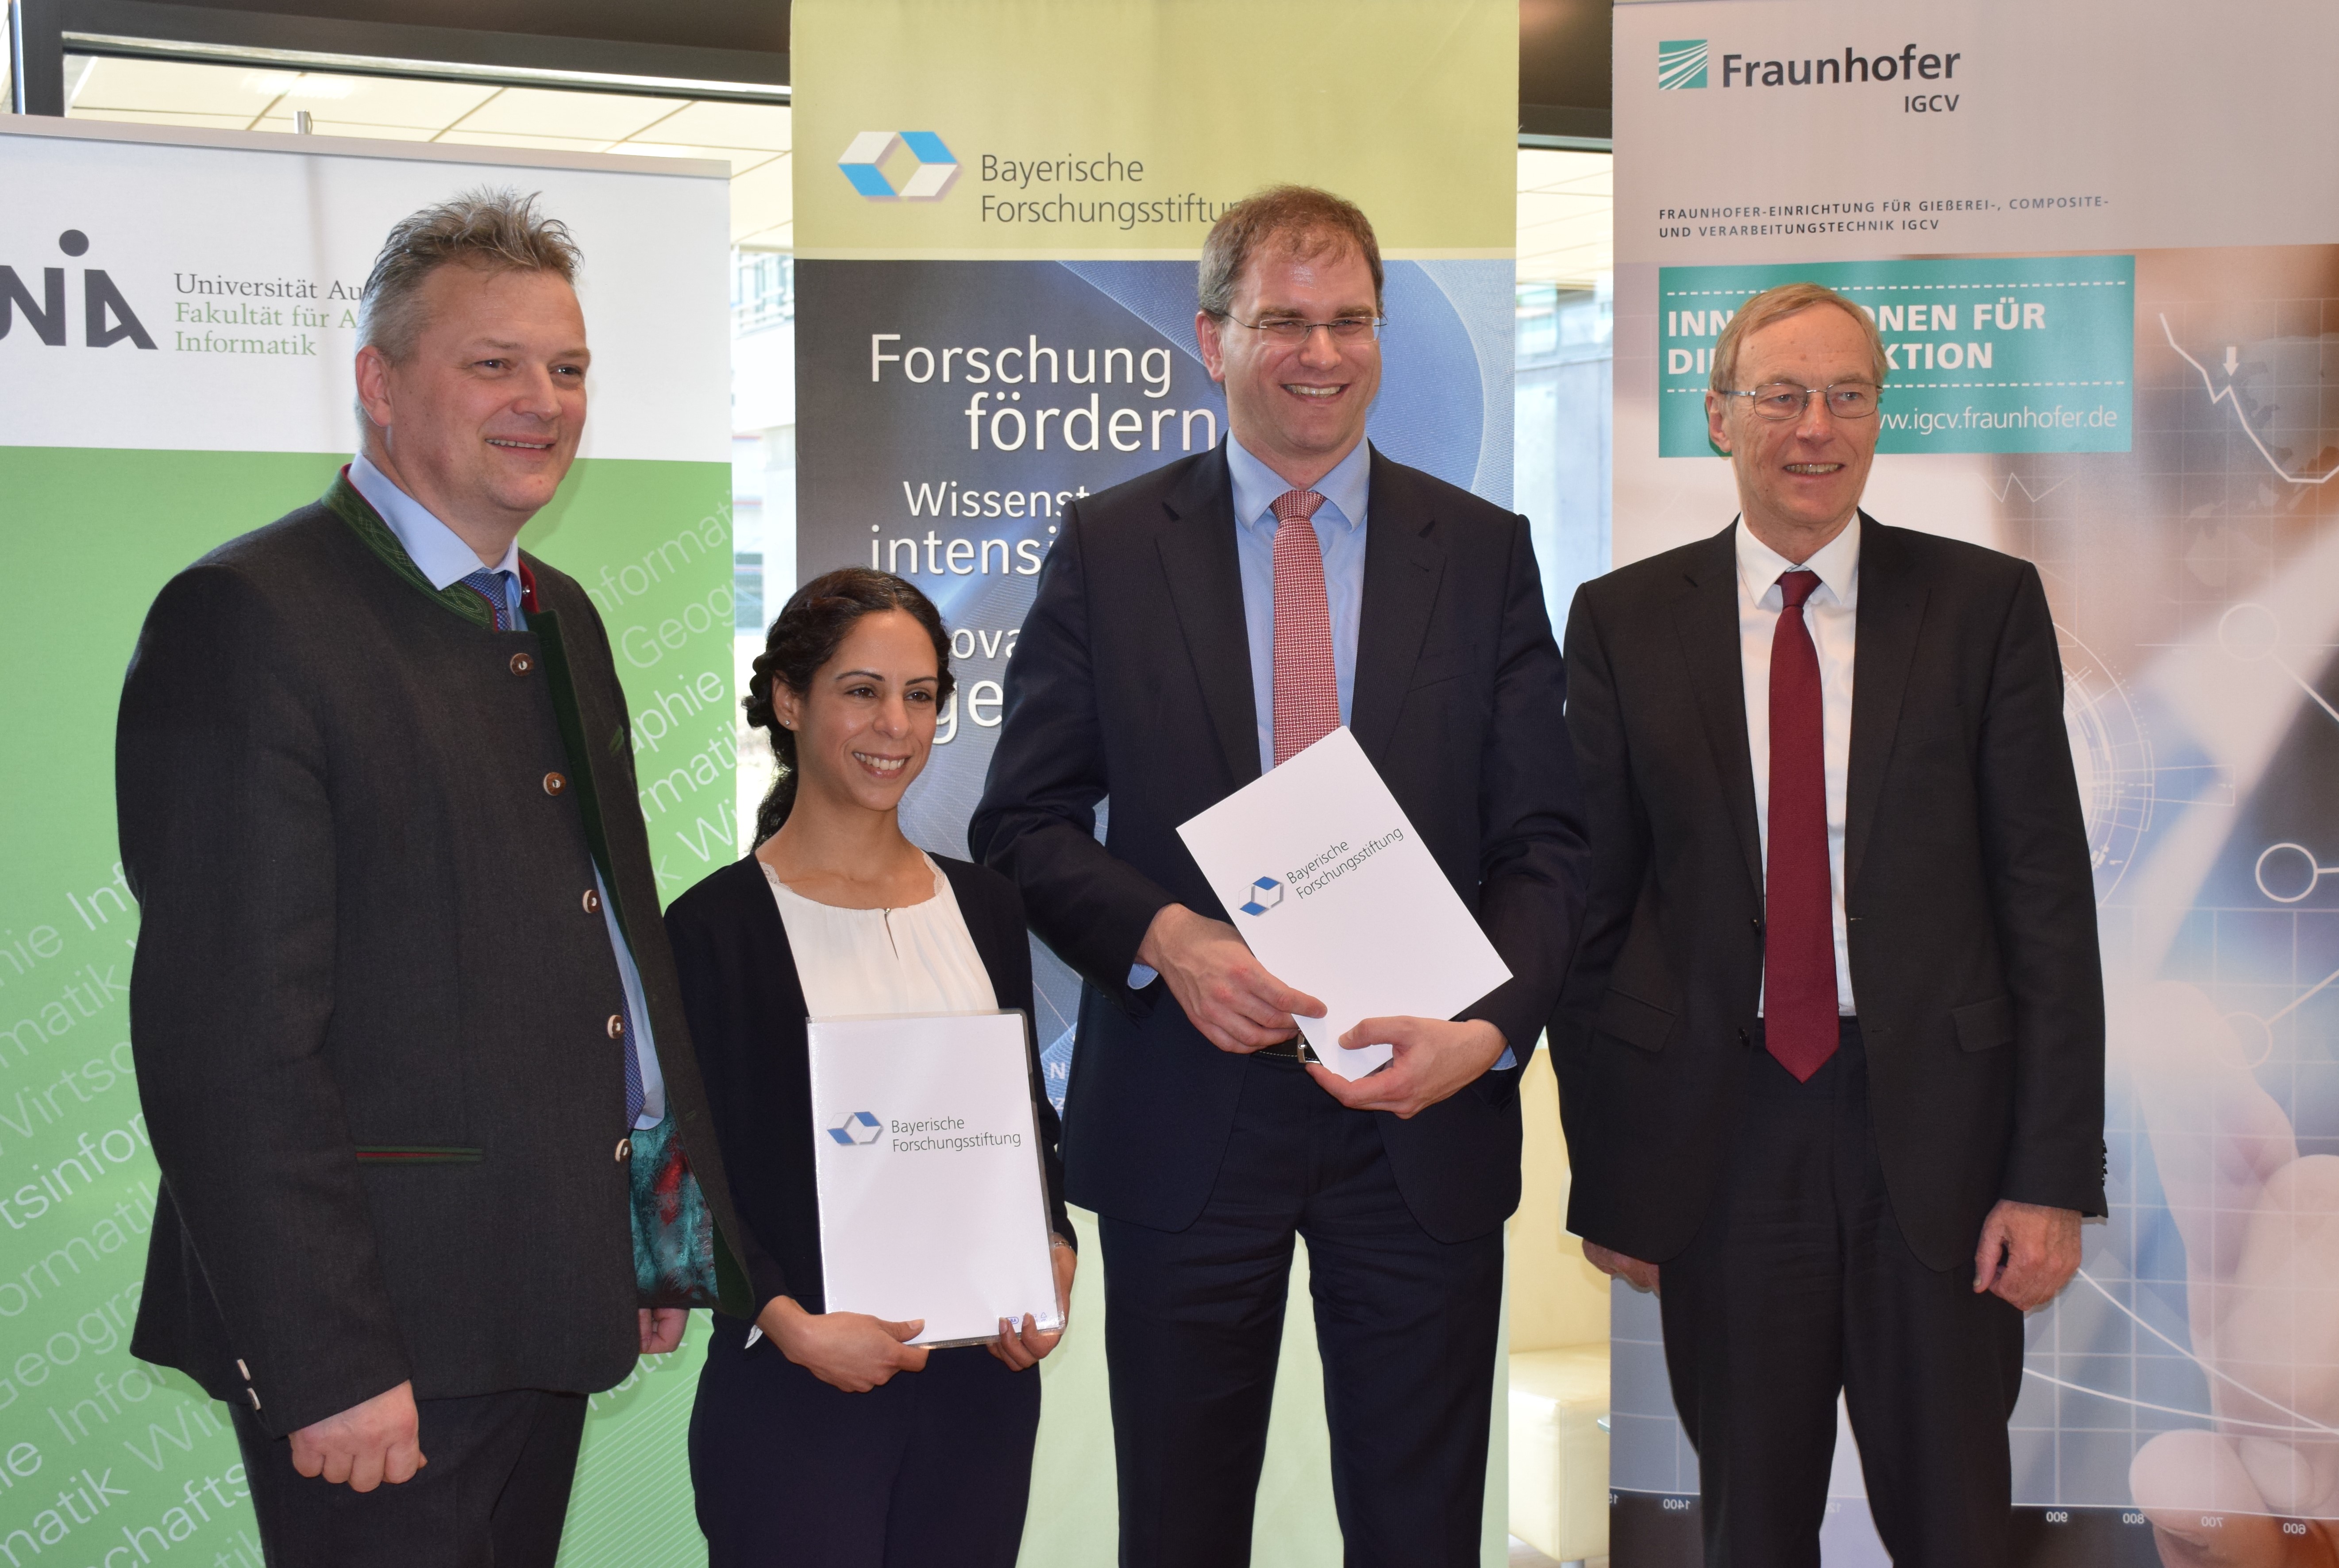 Presentation of funding decision at Fraunhofer IGCV